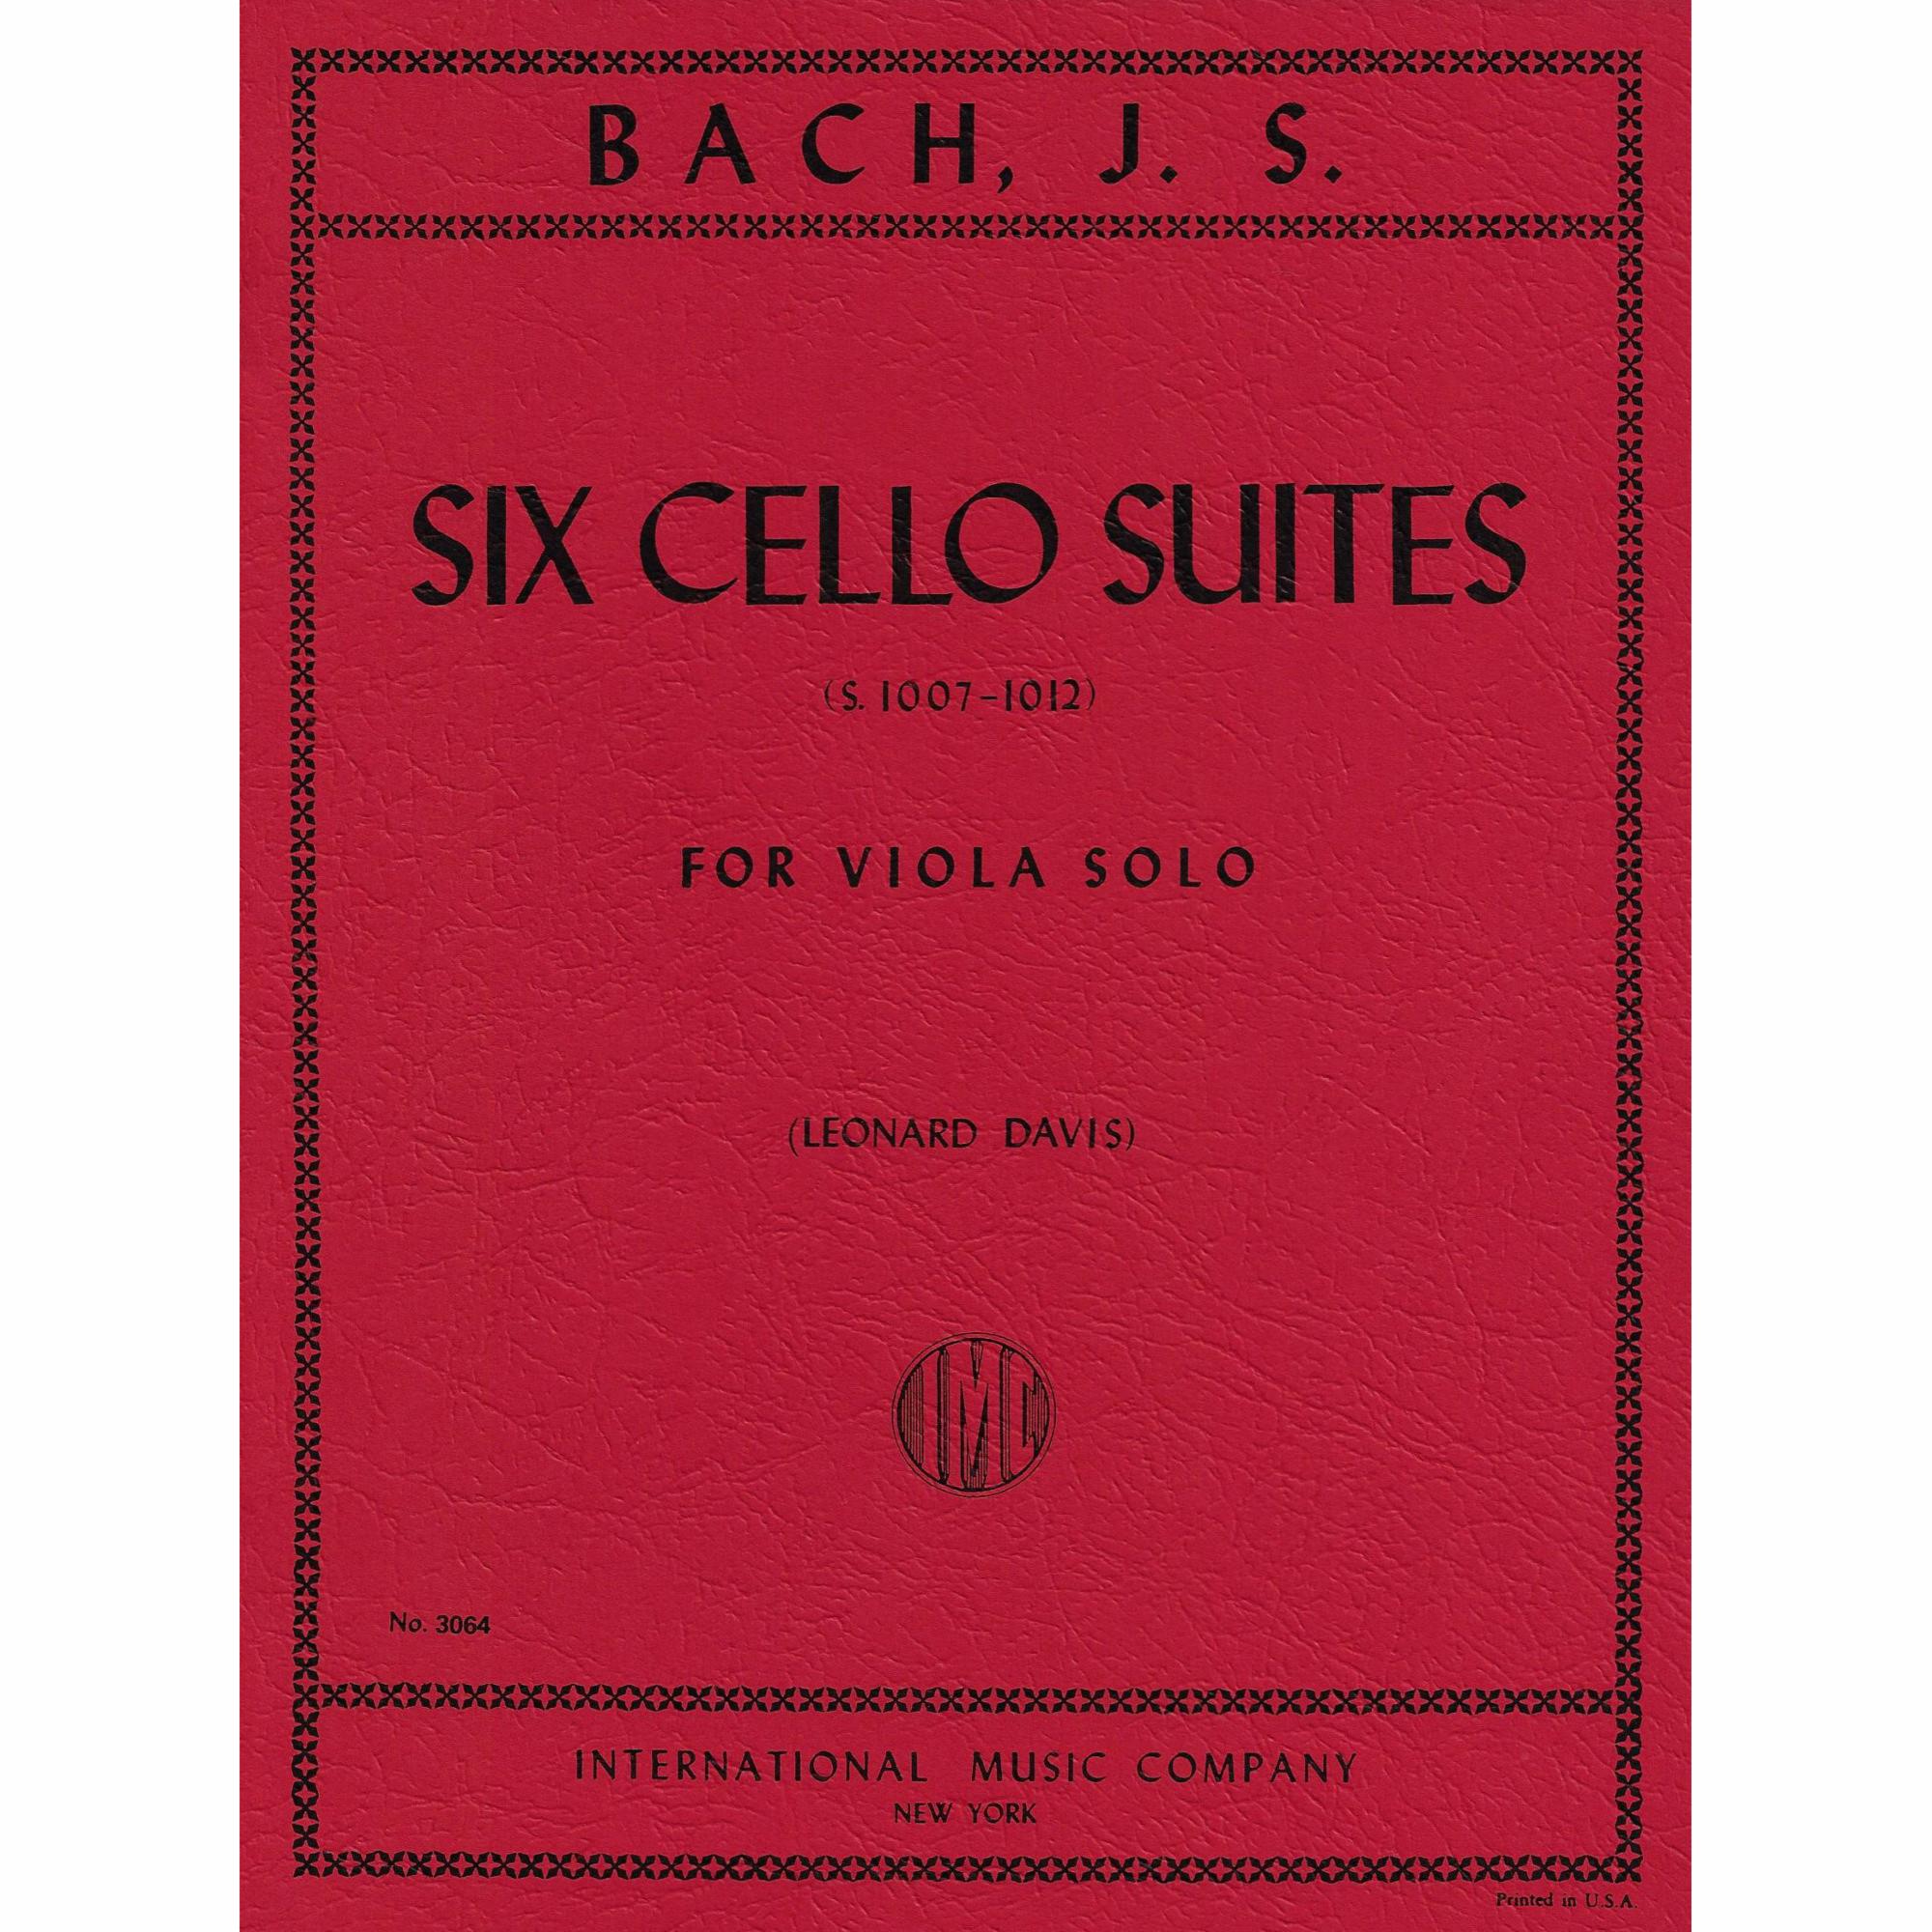 Bach -- Six Cello Suites, S. 1007-1012 for Solo Viola